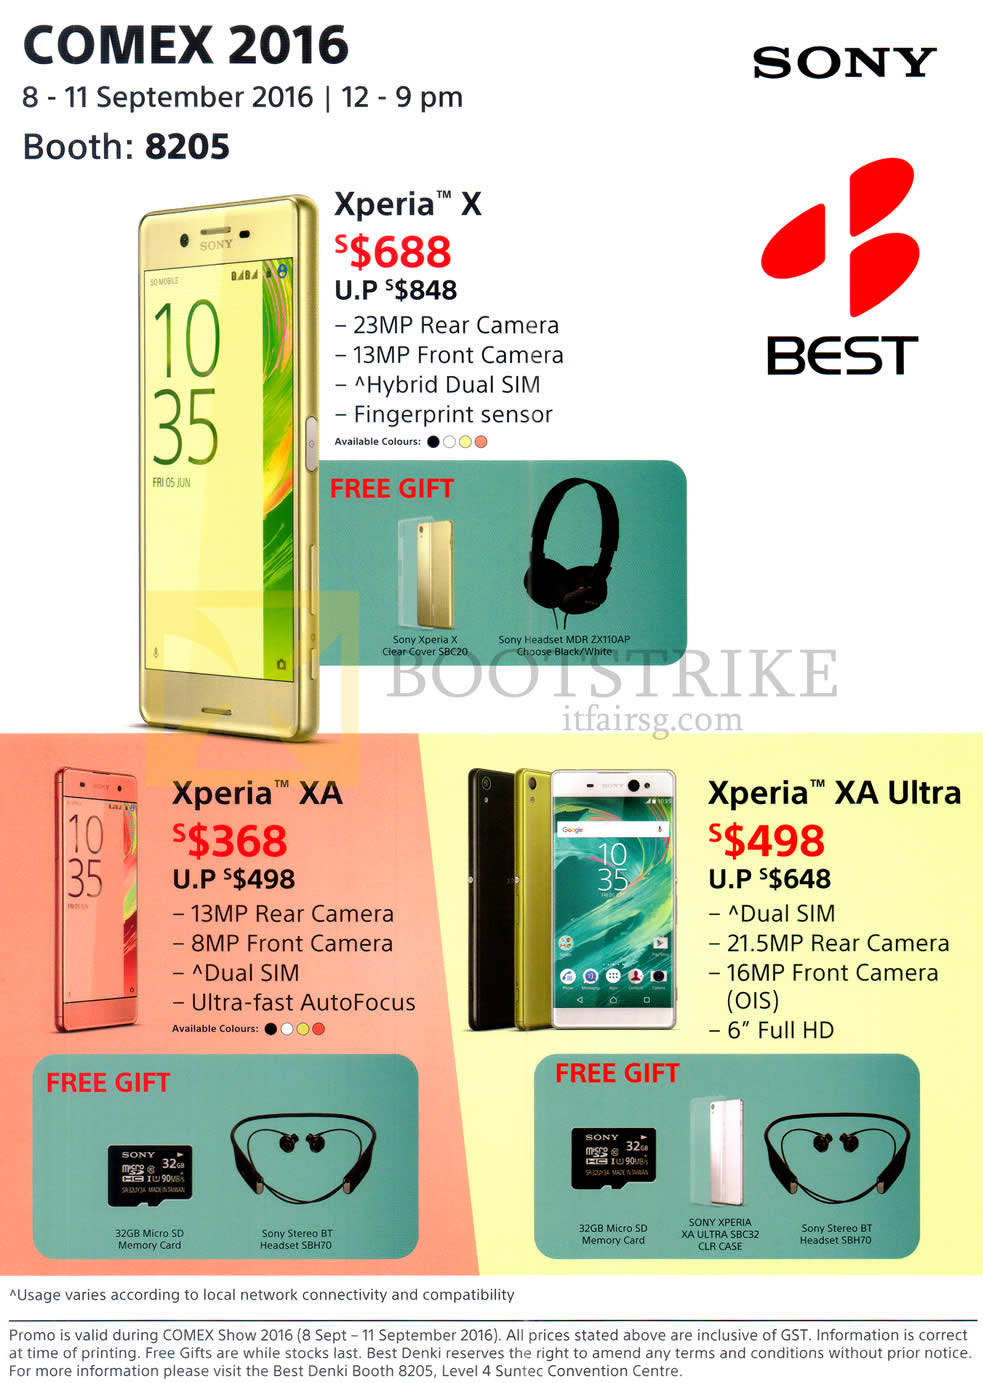 COMEX 2016 price list image brochure of Best Denki Mobile Smartphones Sony Xperia X, XA, XA Ultra